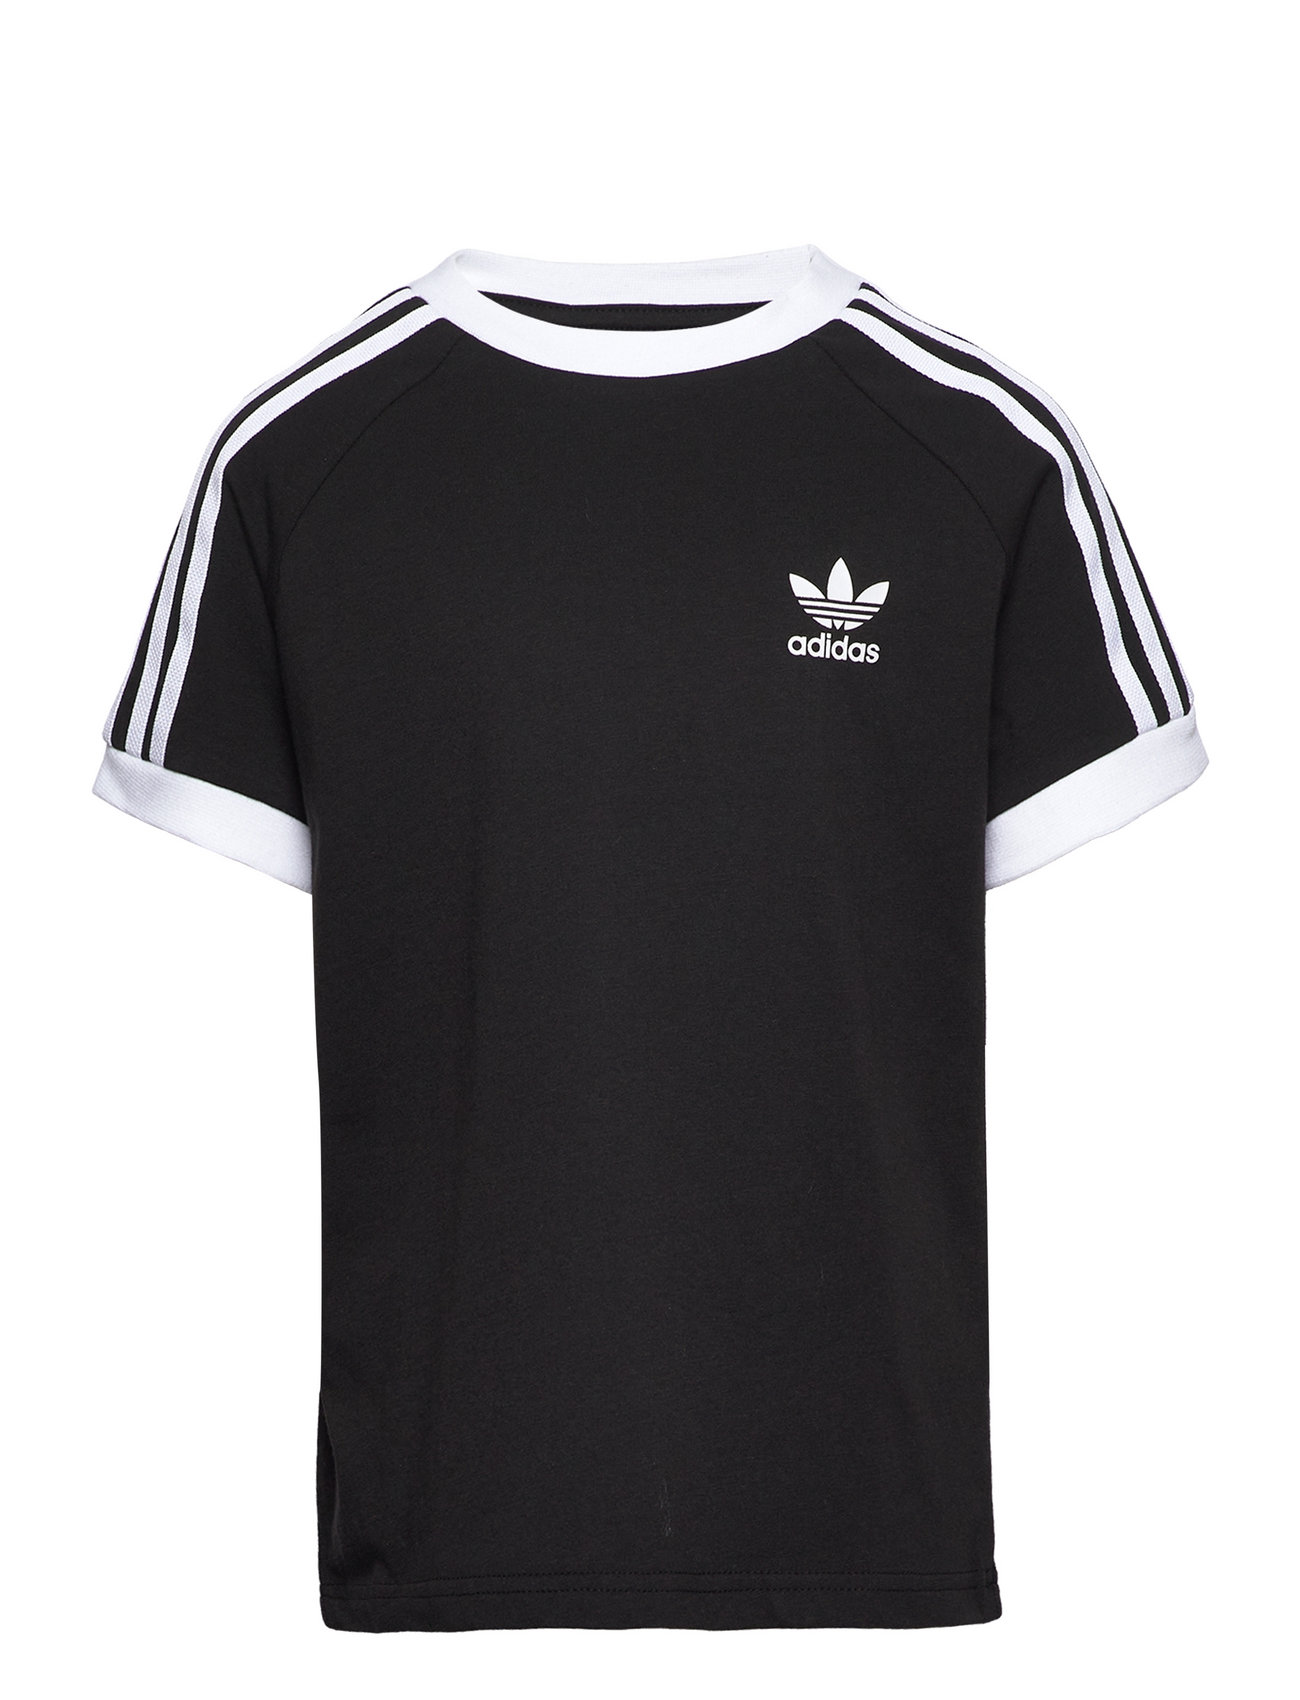 3Stripes Tee Sport T-shirts Sports Tops Black Adidas Originals